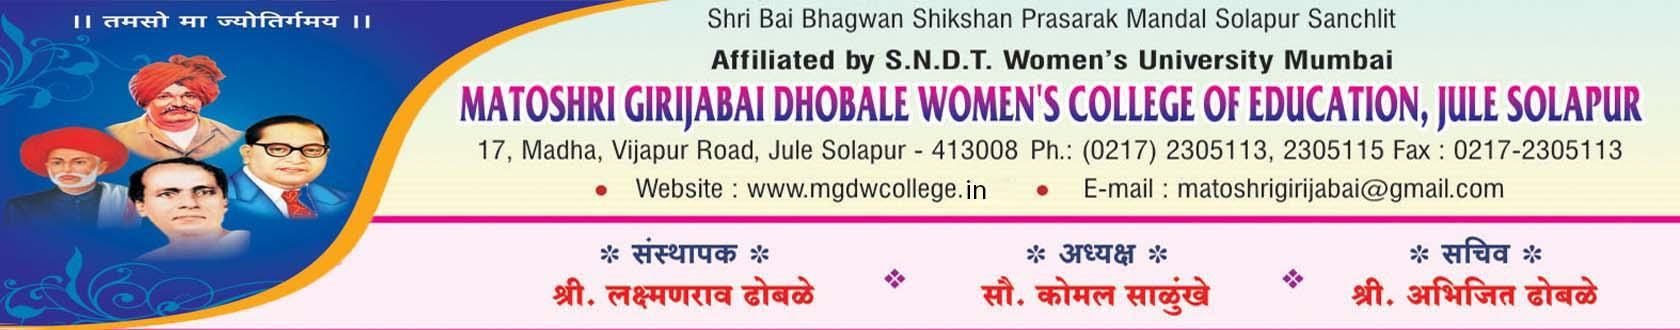 Matoshri Girijabai Dhobale Women's College of Education